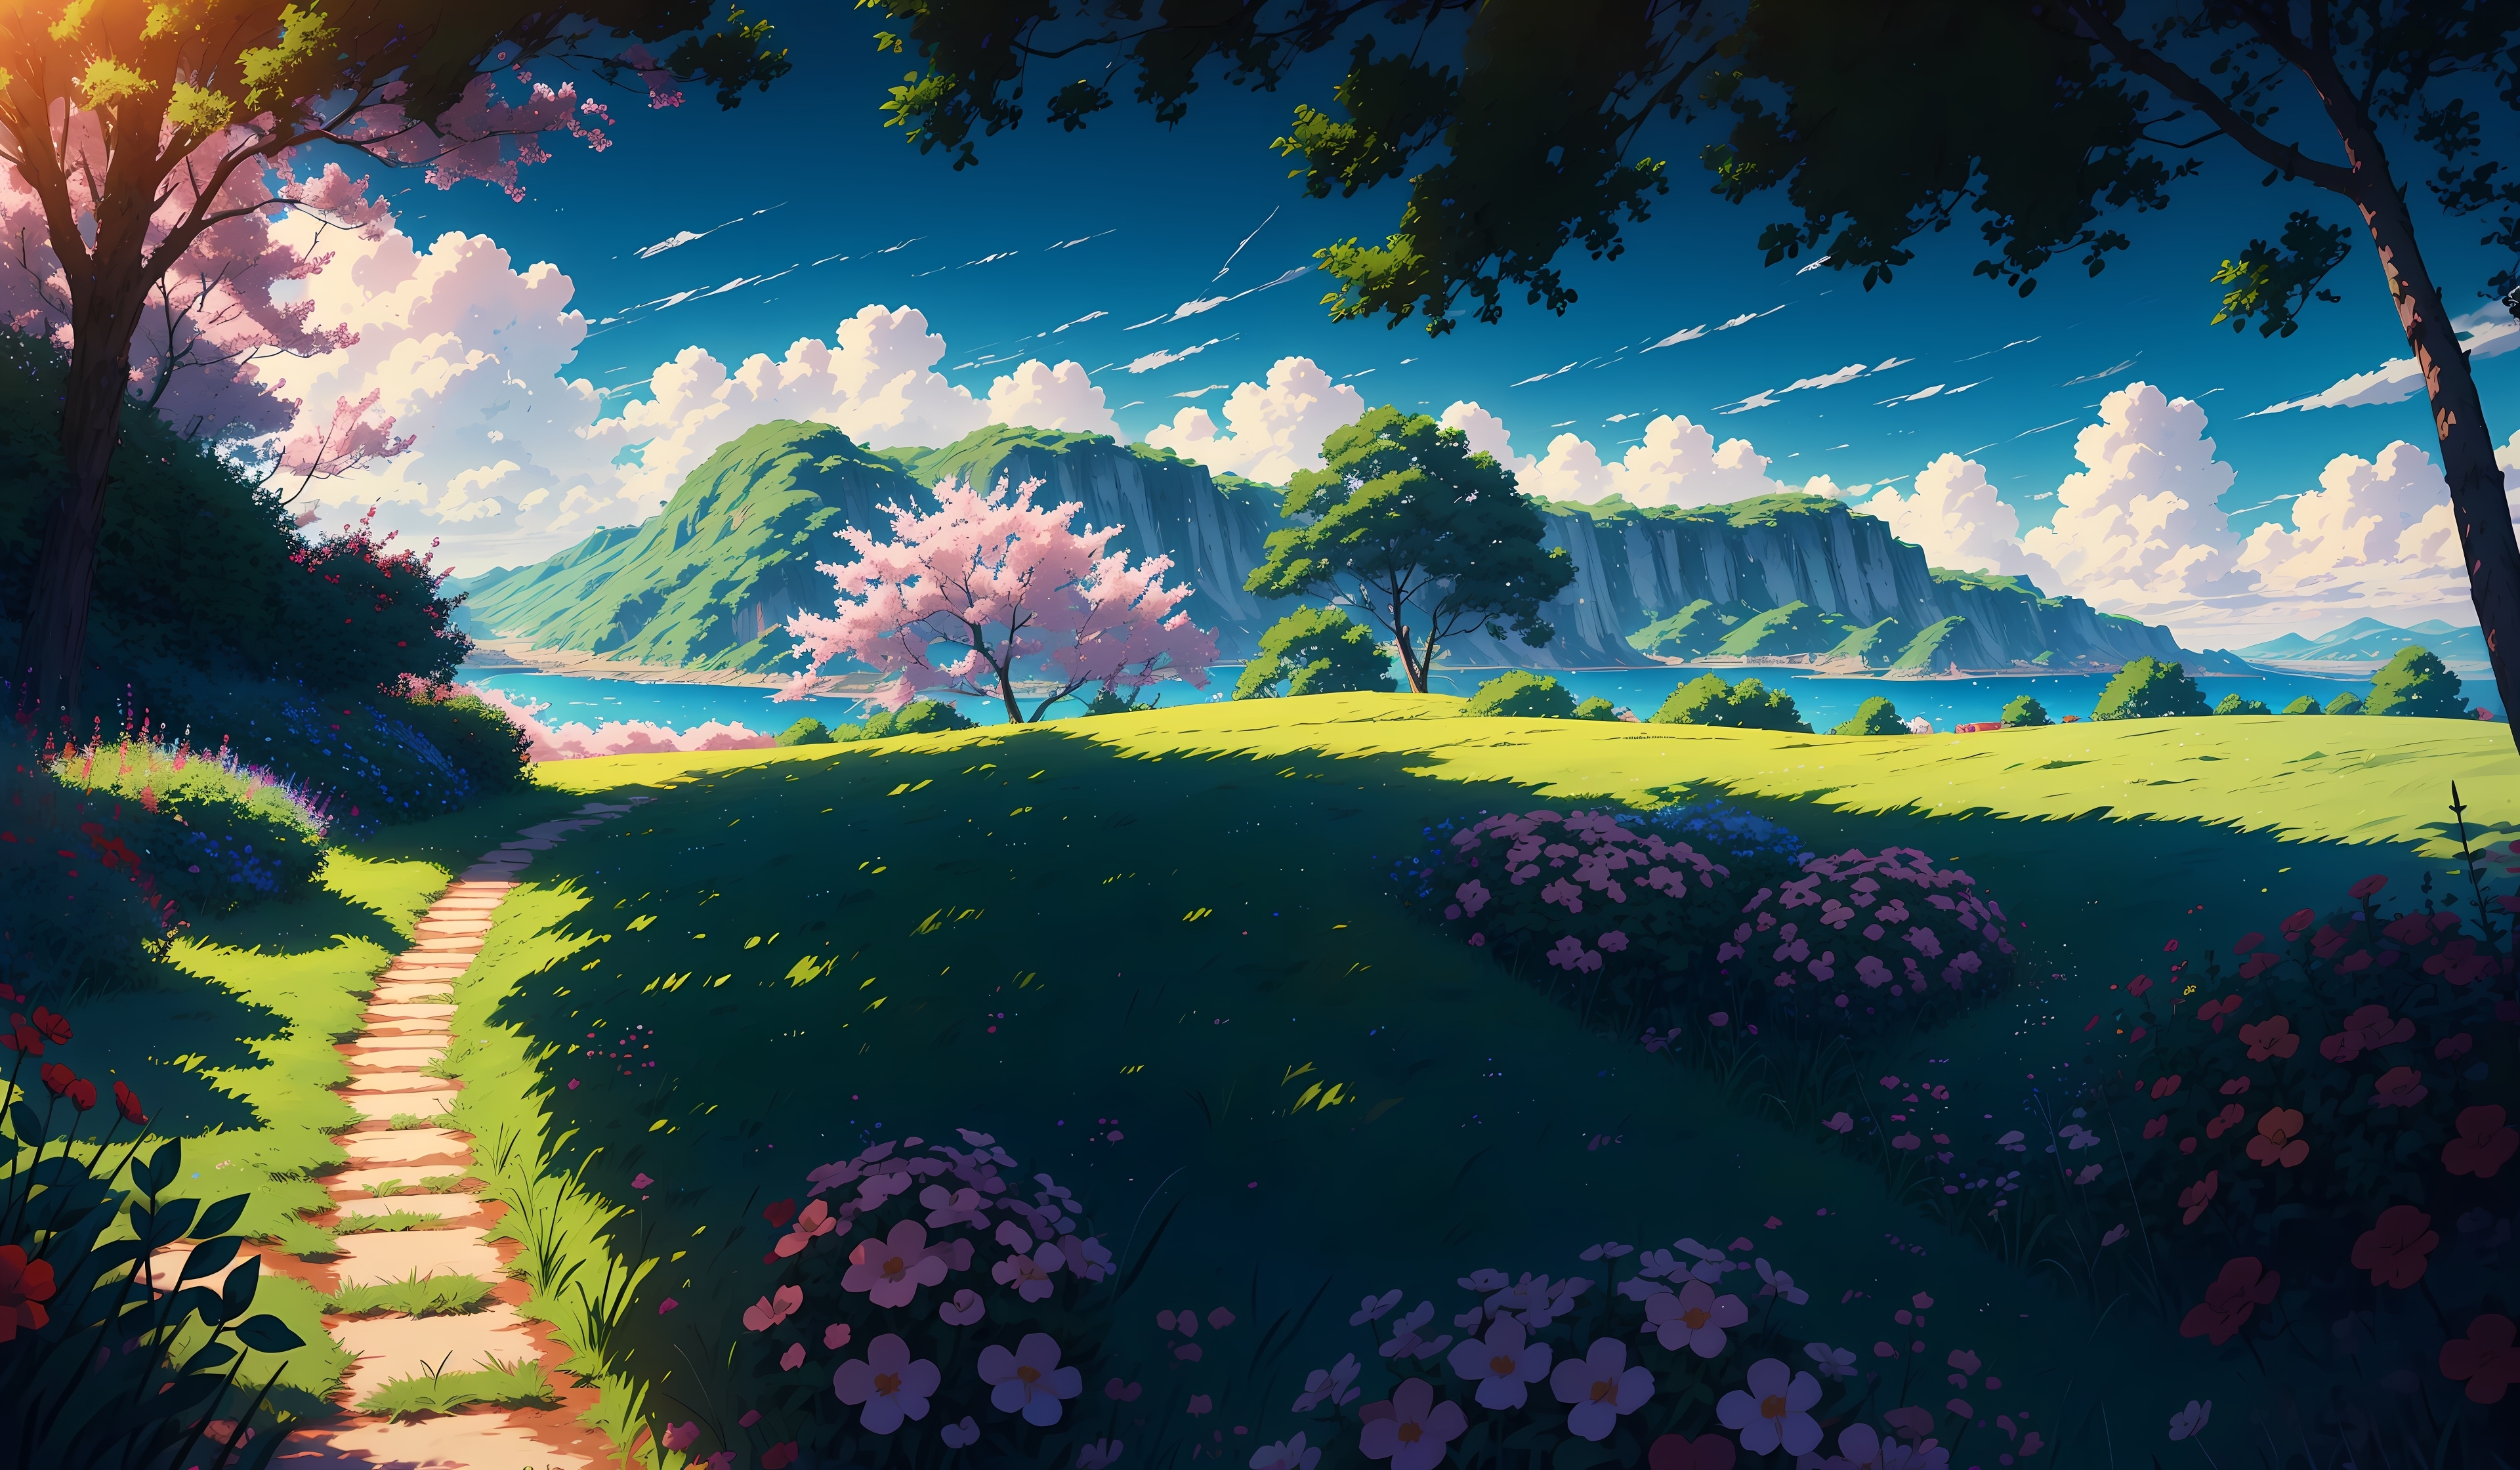 Anime Original 8k Ultra HD Wallpaper in 2023  Anime backgrounds wallpapers,  Scenery wallpaper, Desktop wallpaper art